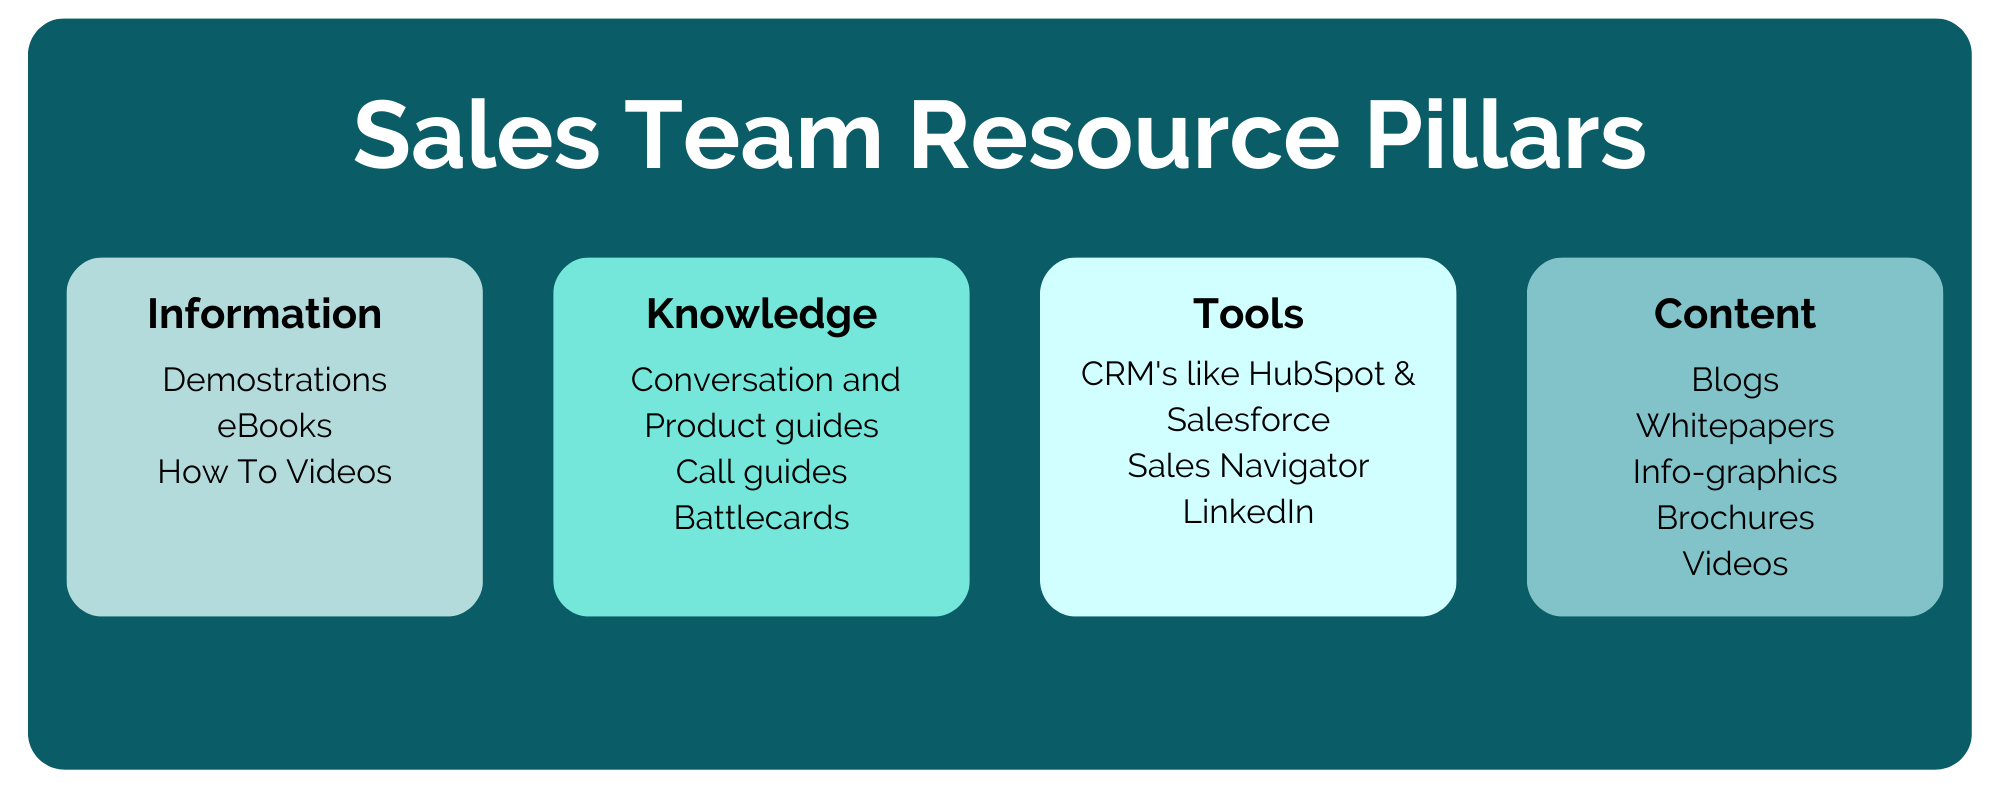 Sales Team Resource Pillars